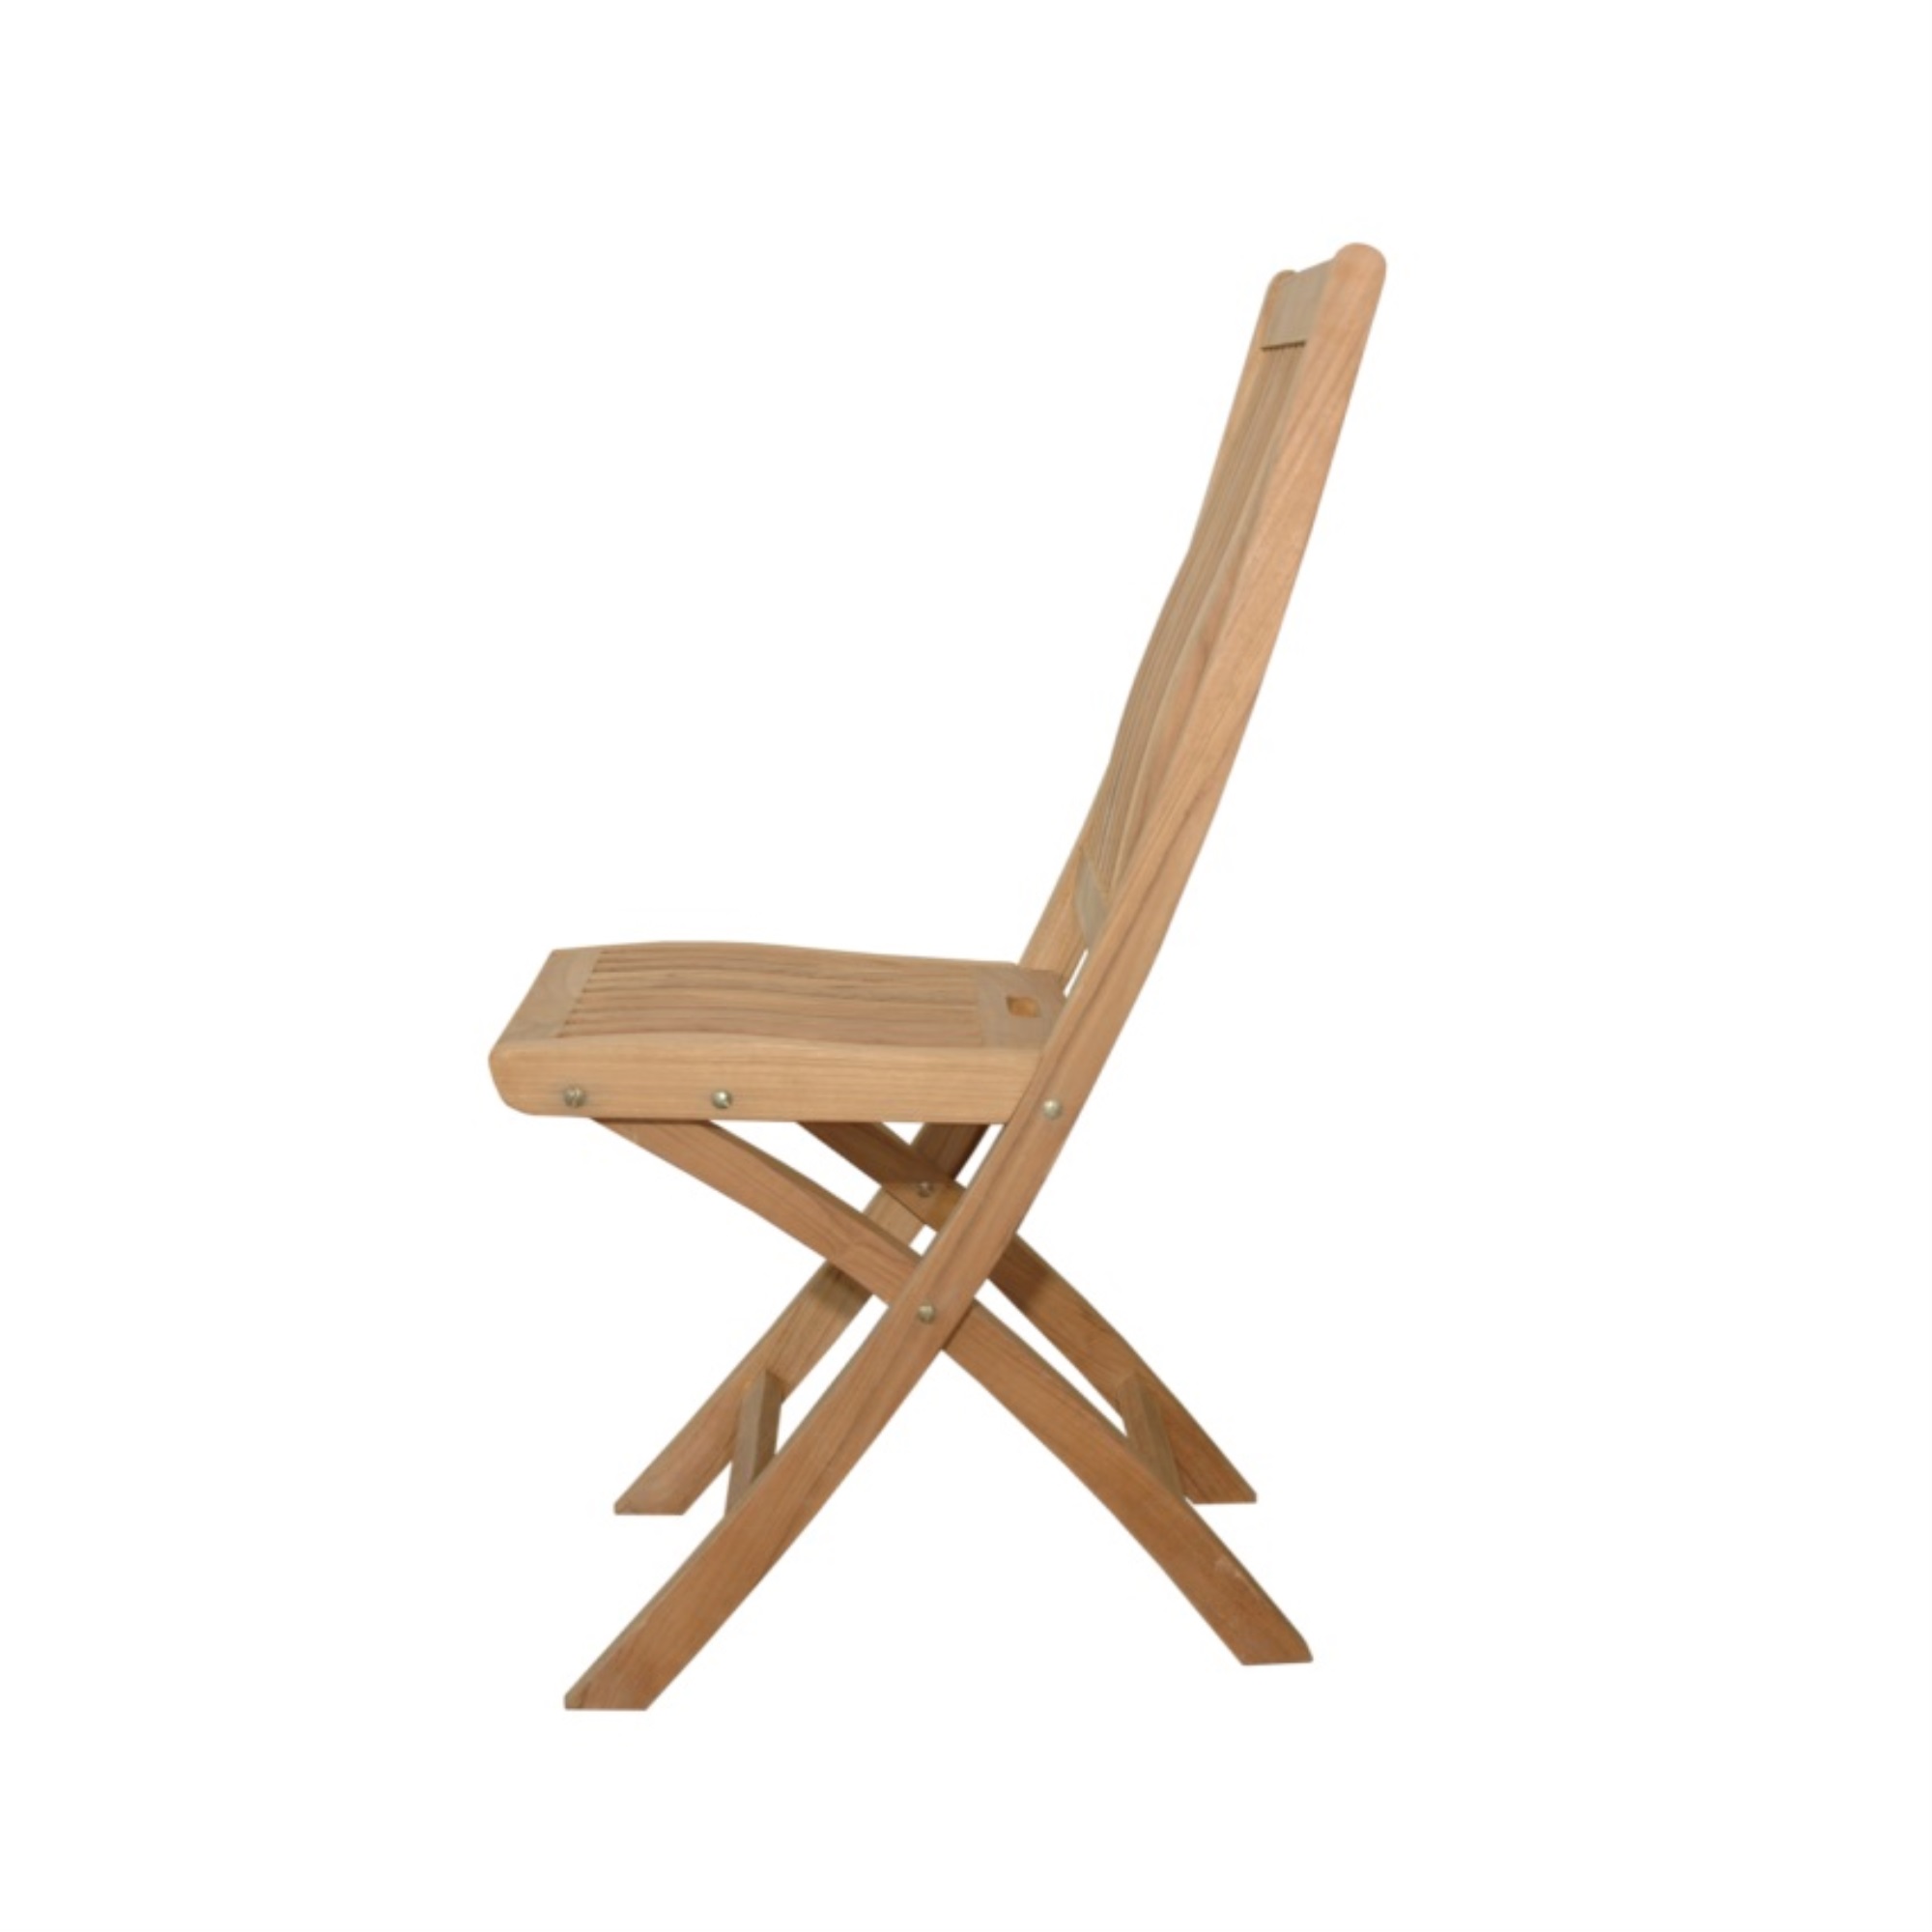 Anderson Teak Tropico Folding Chair - image 2 of 3